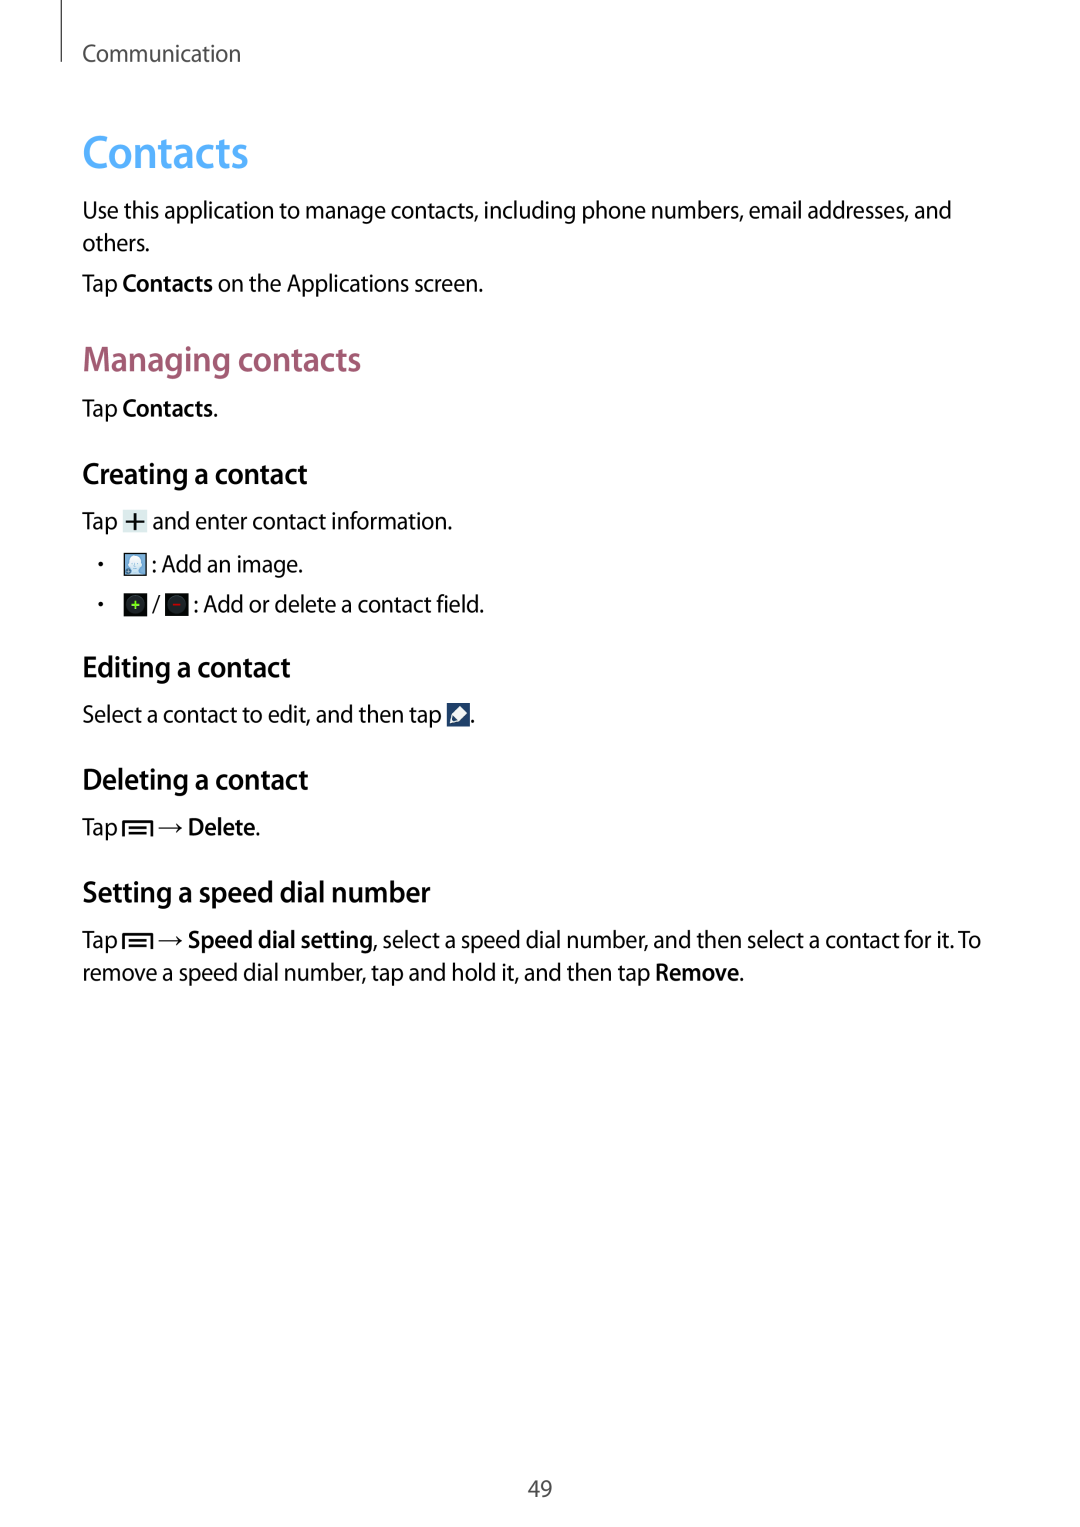 Samsung SM-G7102ZWATHR manual Contacts, Managing contacts, Creating a contact, Editing a contact, Deleting a contact 